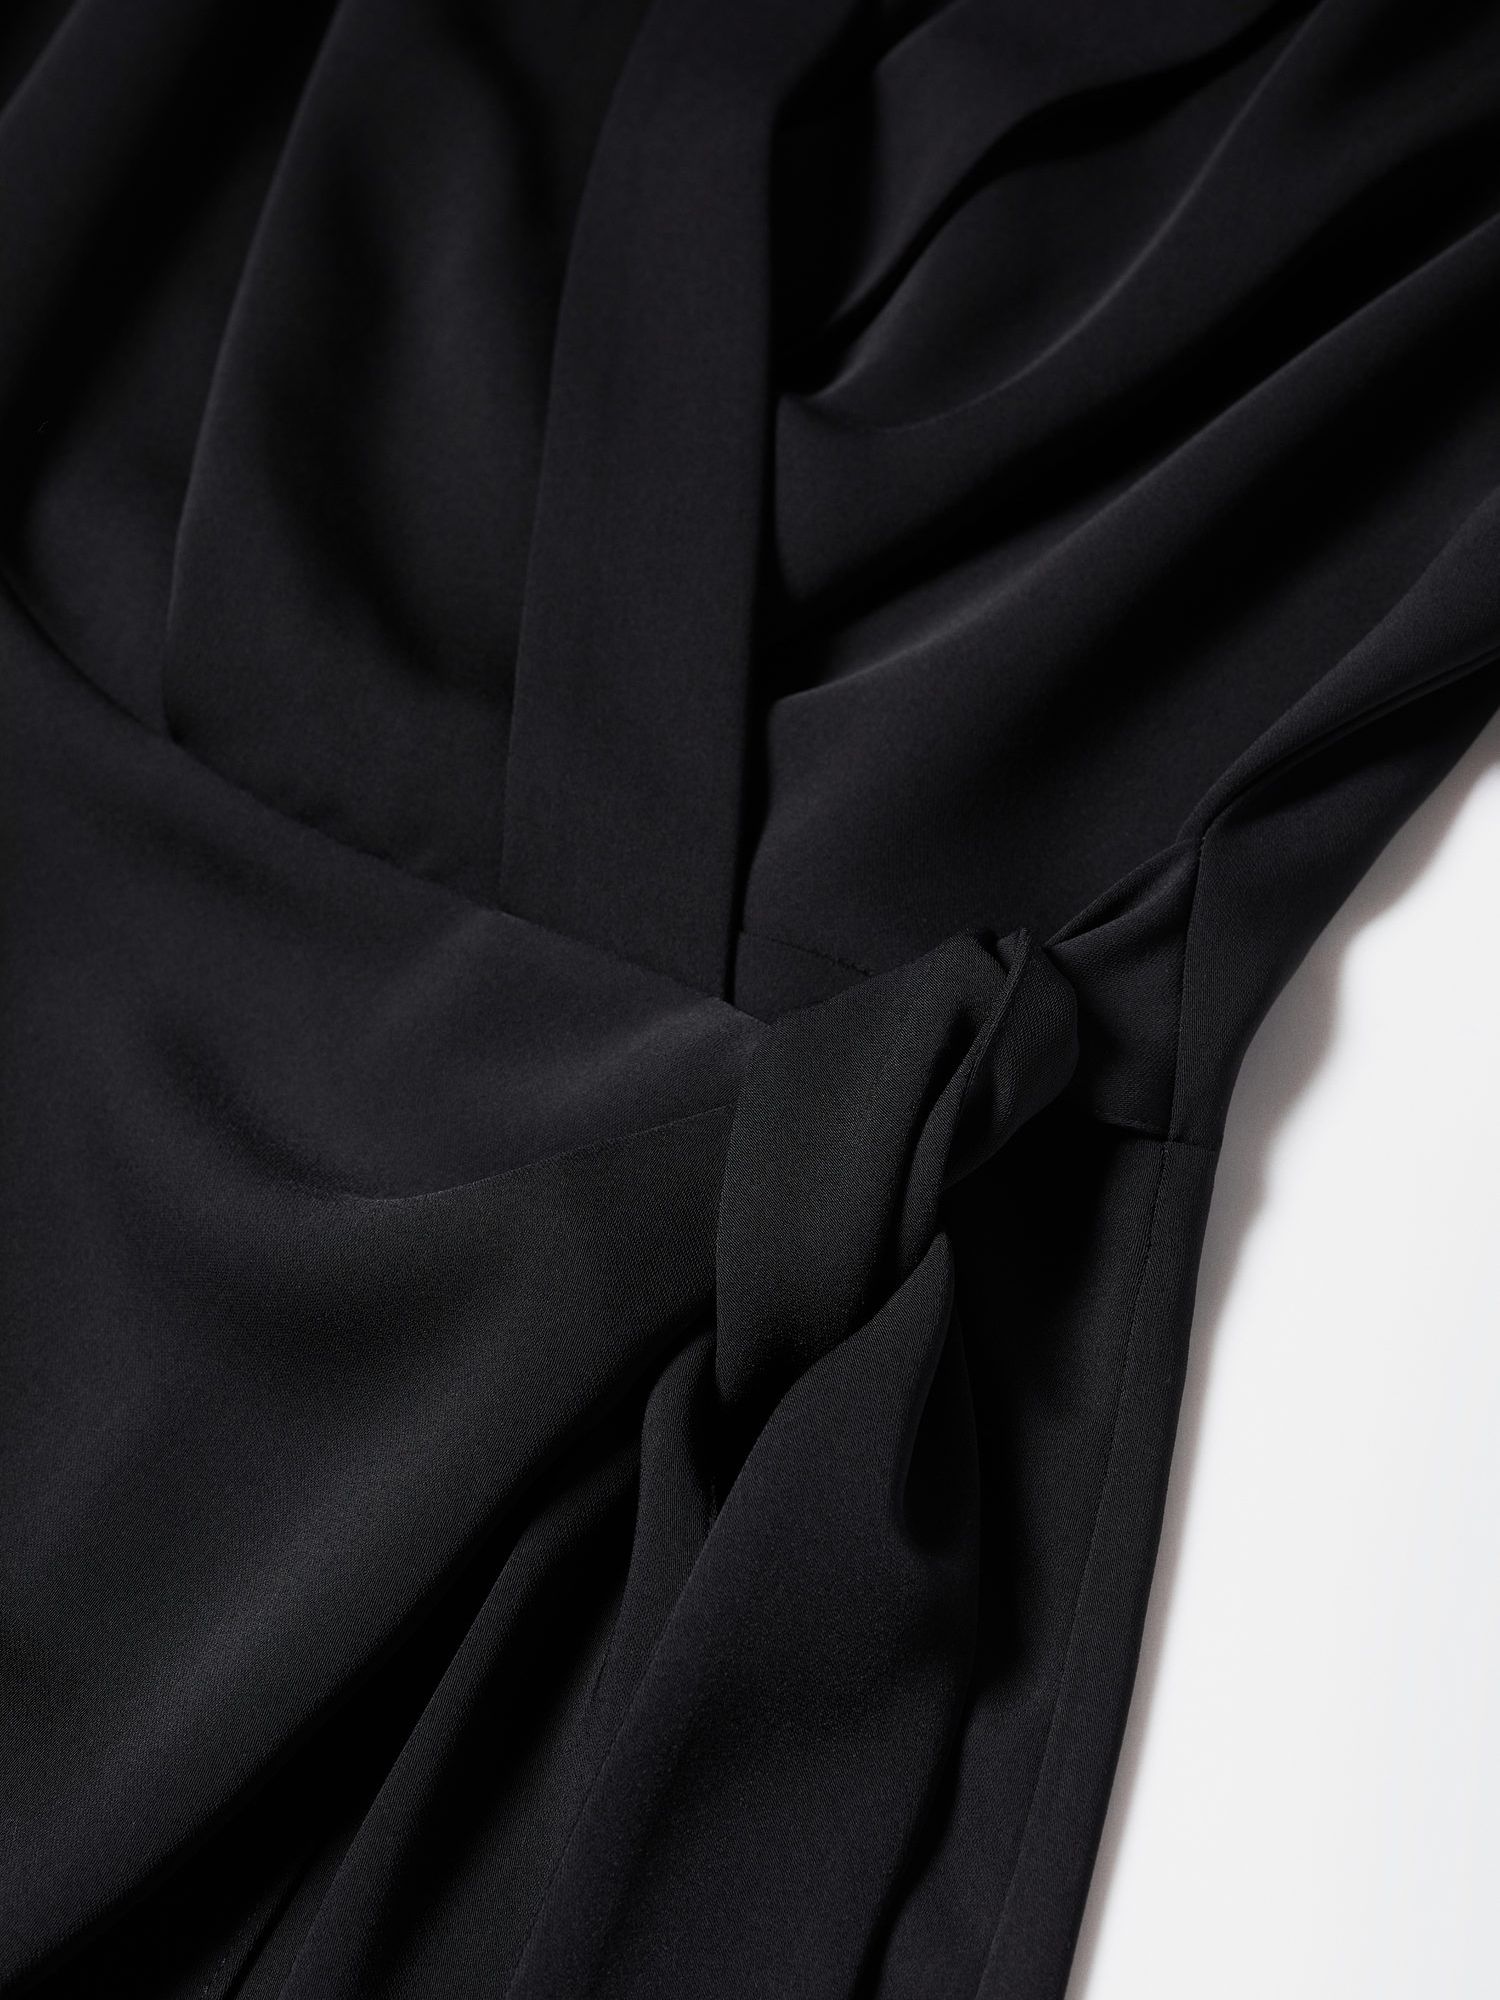 Mango Vivian Knotted Wrap Dress, Black at John Lewis & Partners